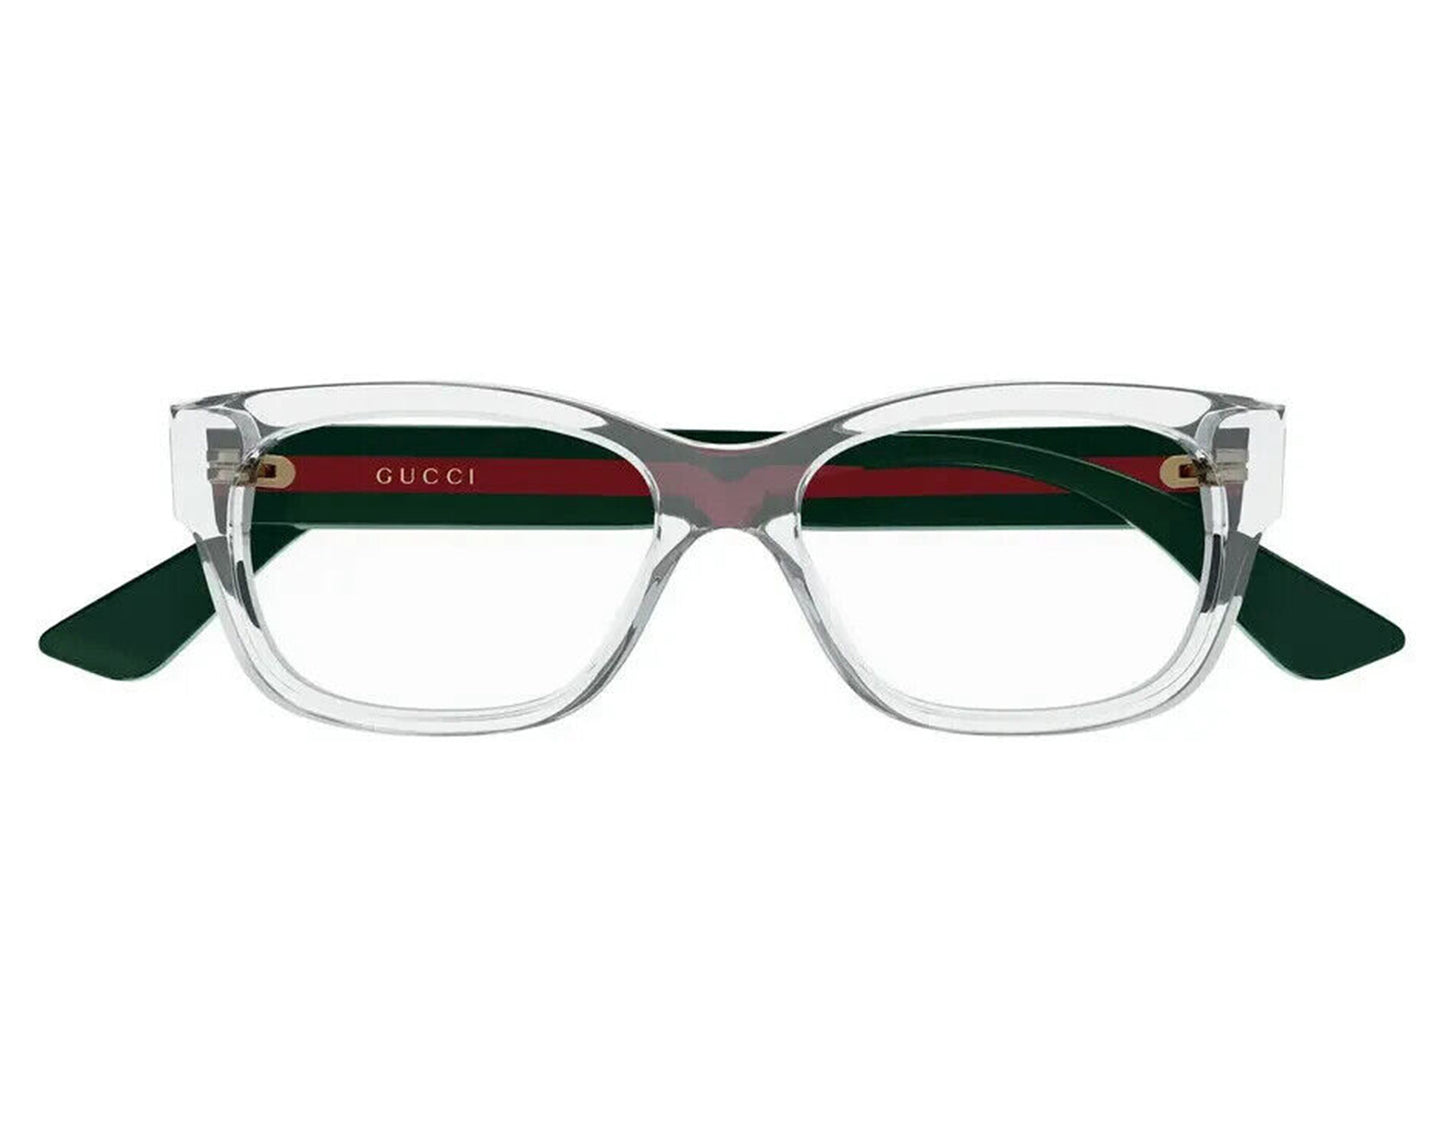 Gucci GG0278o-016 55mm New Eyeglasses